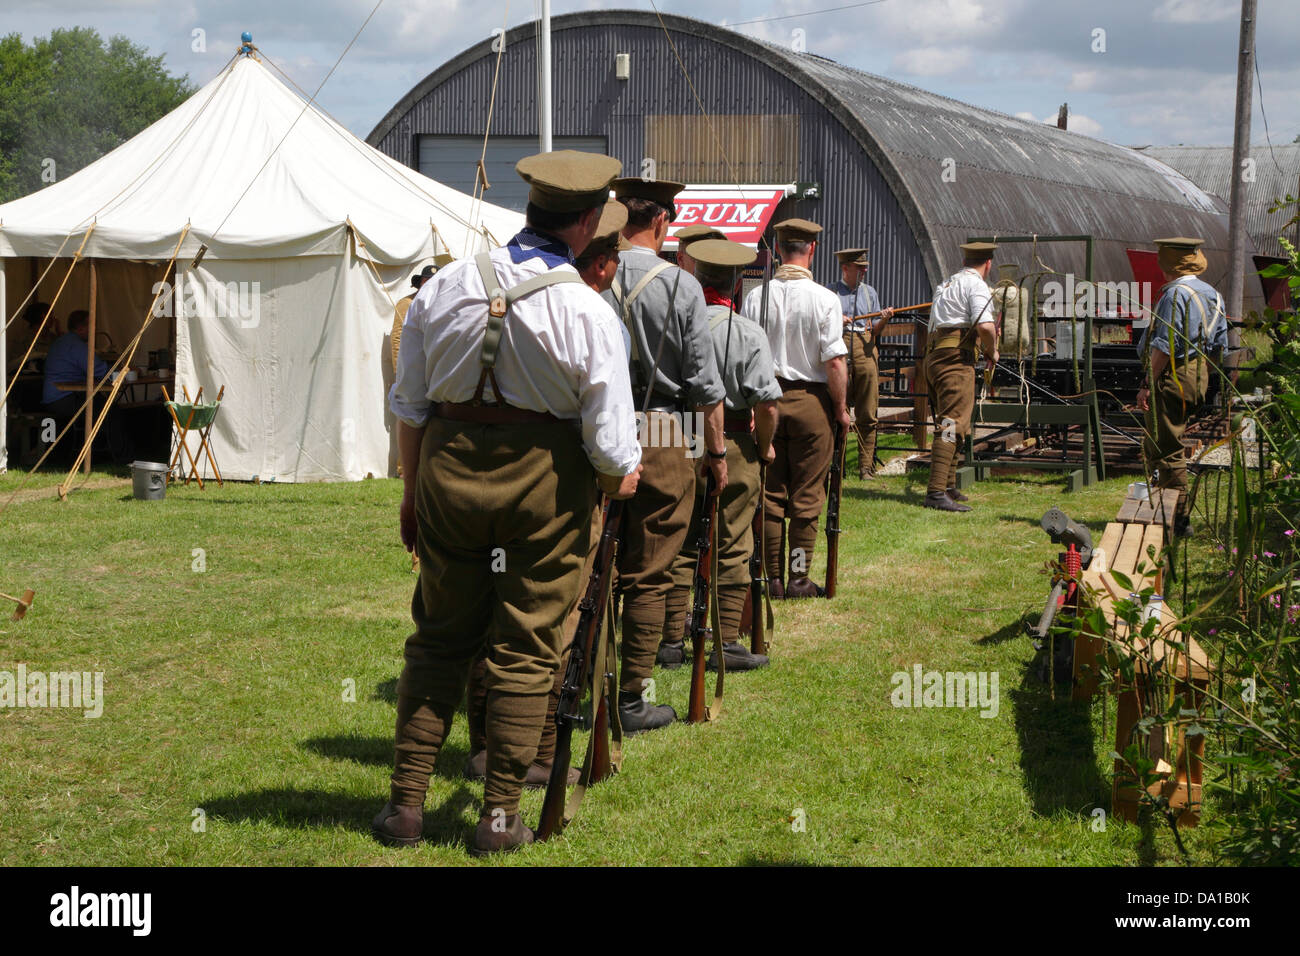 Re-enactment of WW1 Bayonet Practice, at event depicting life in WW1, Tenterden, Kent, UK, GB Stock Photo